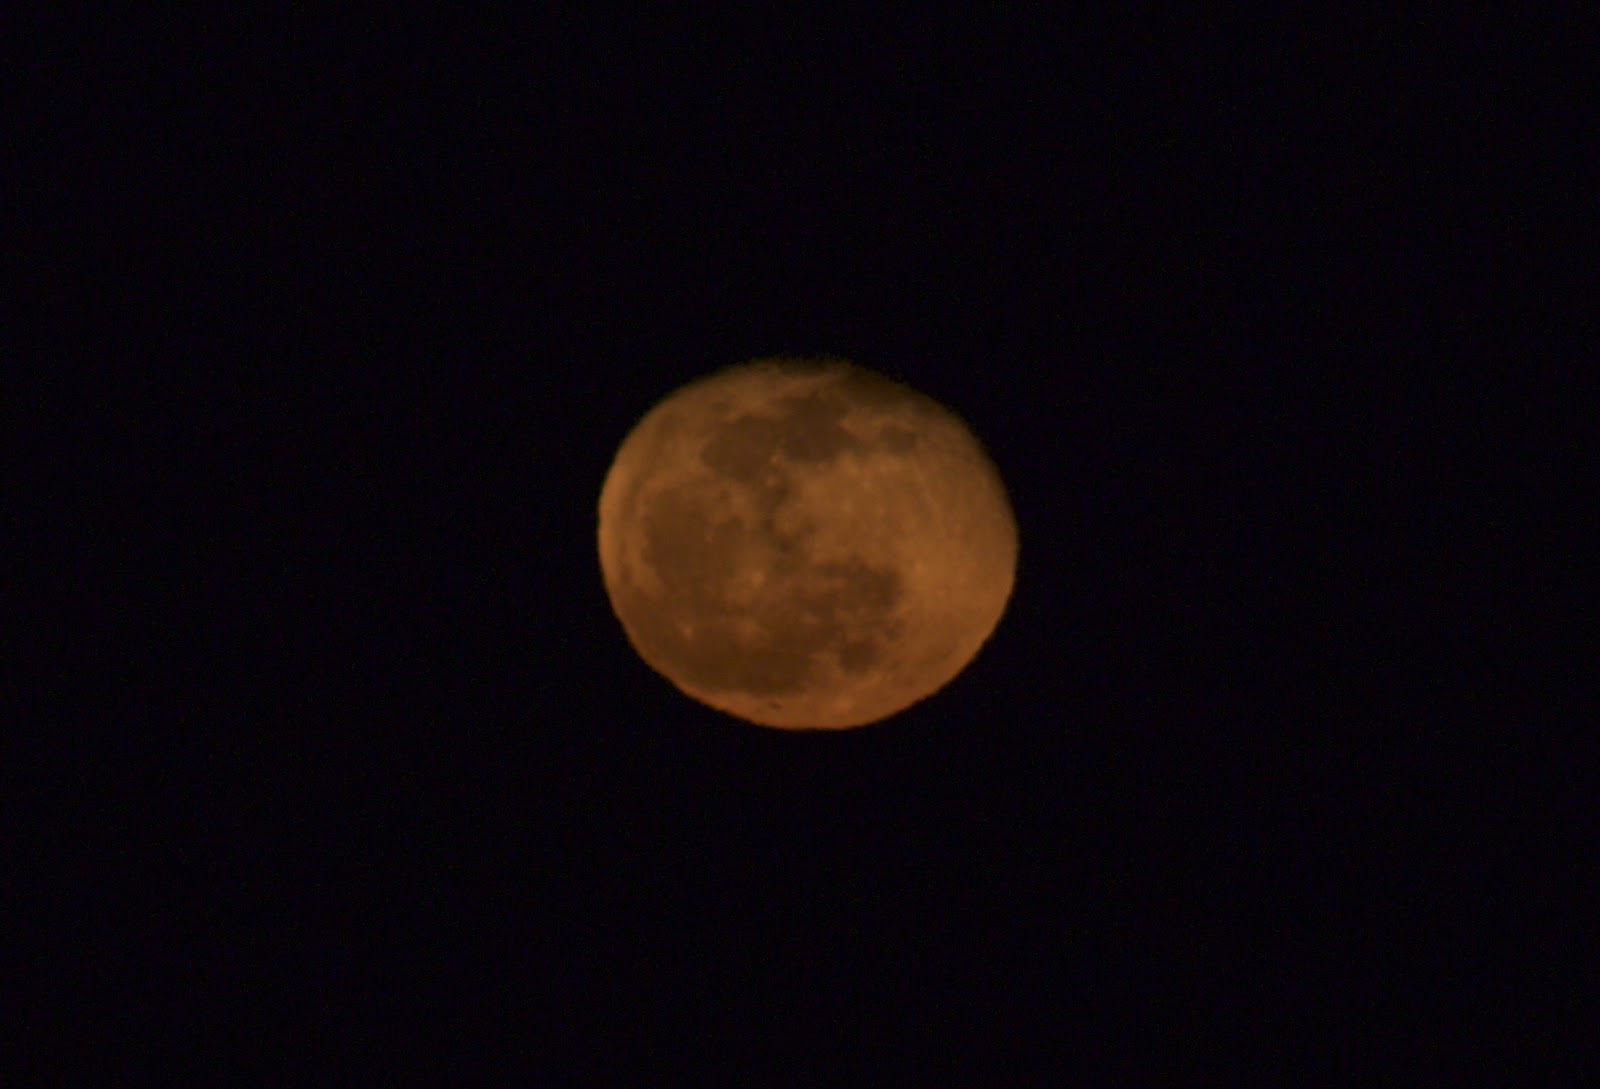 orange moon 1/15 sec